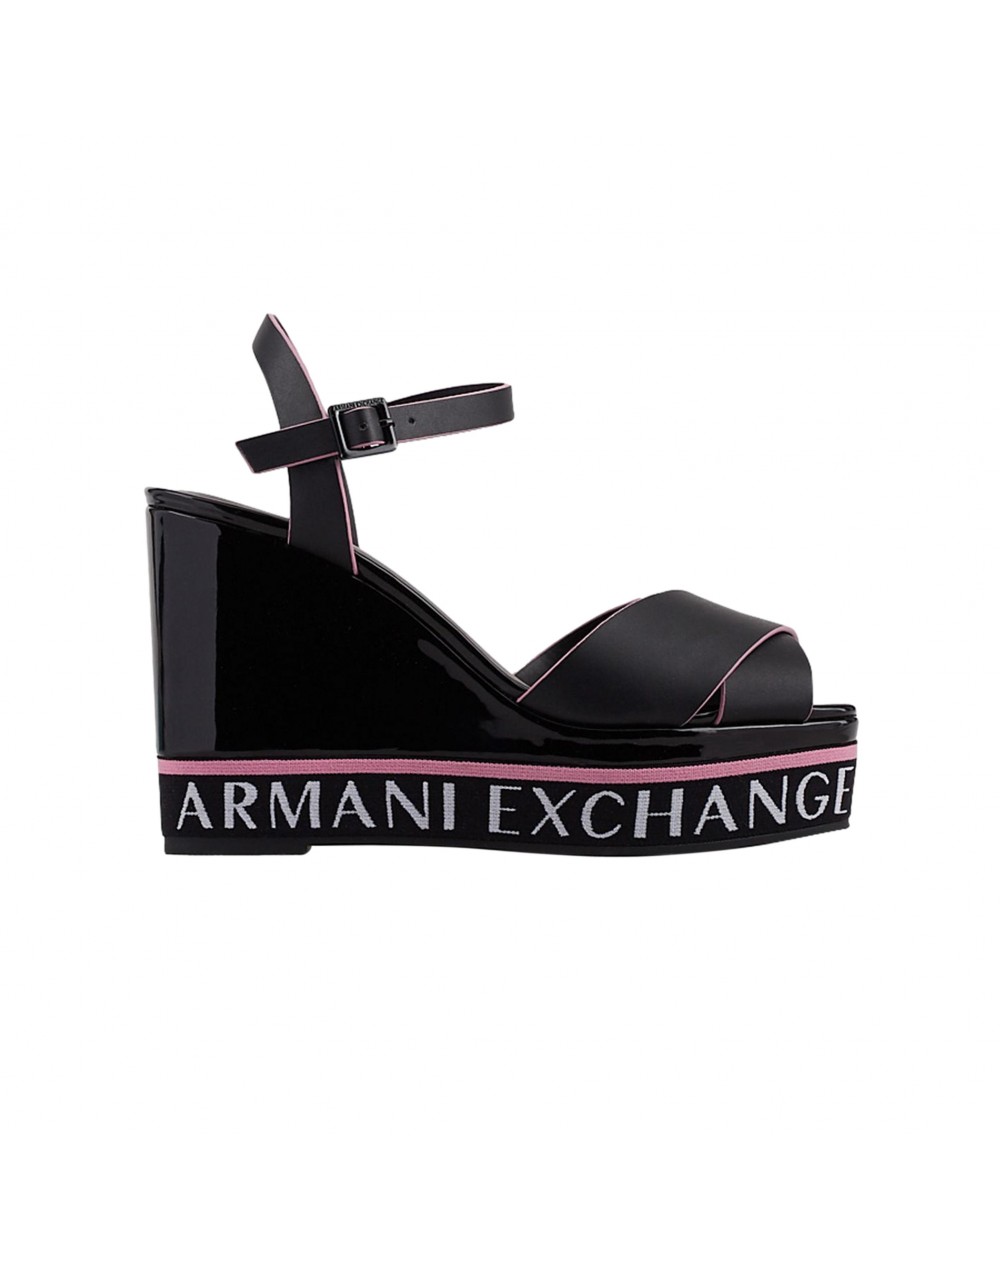 Armani Exchange Batai Moterims